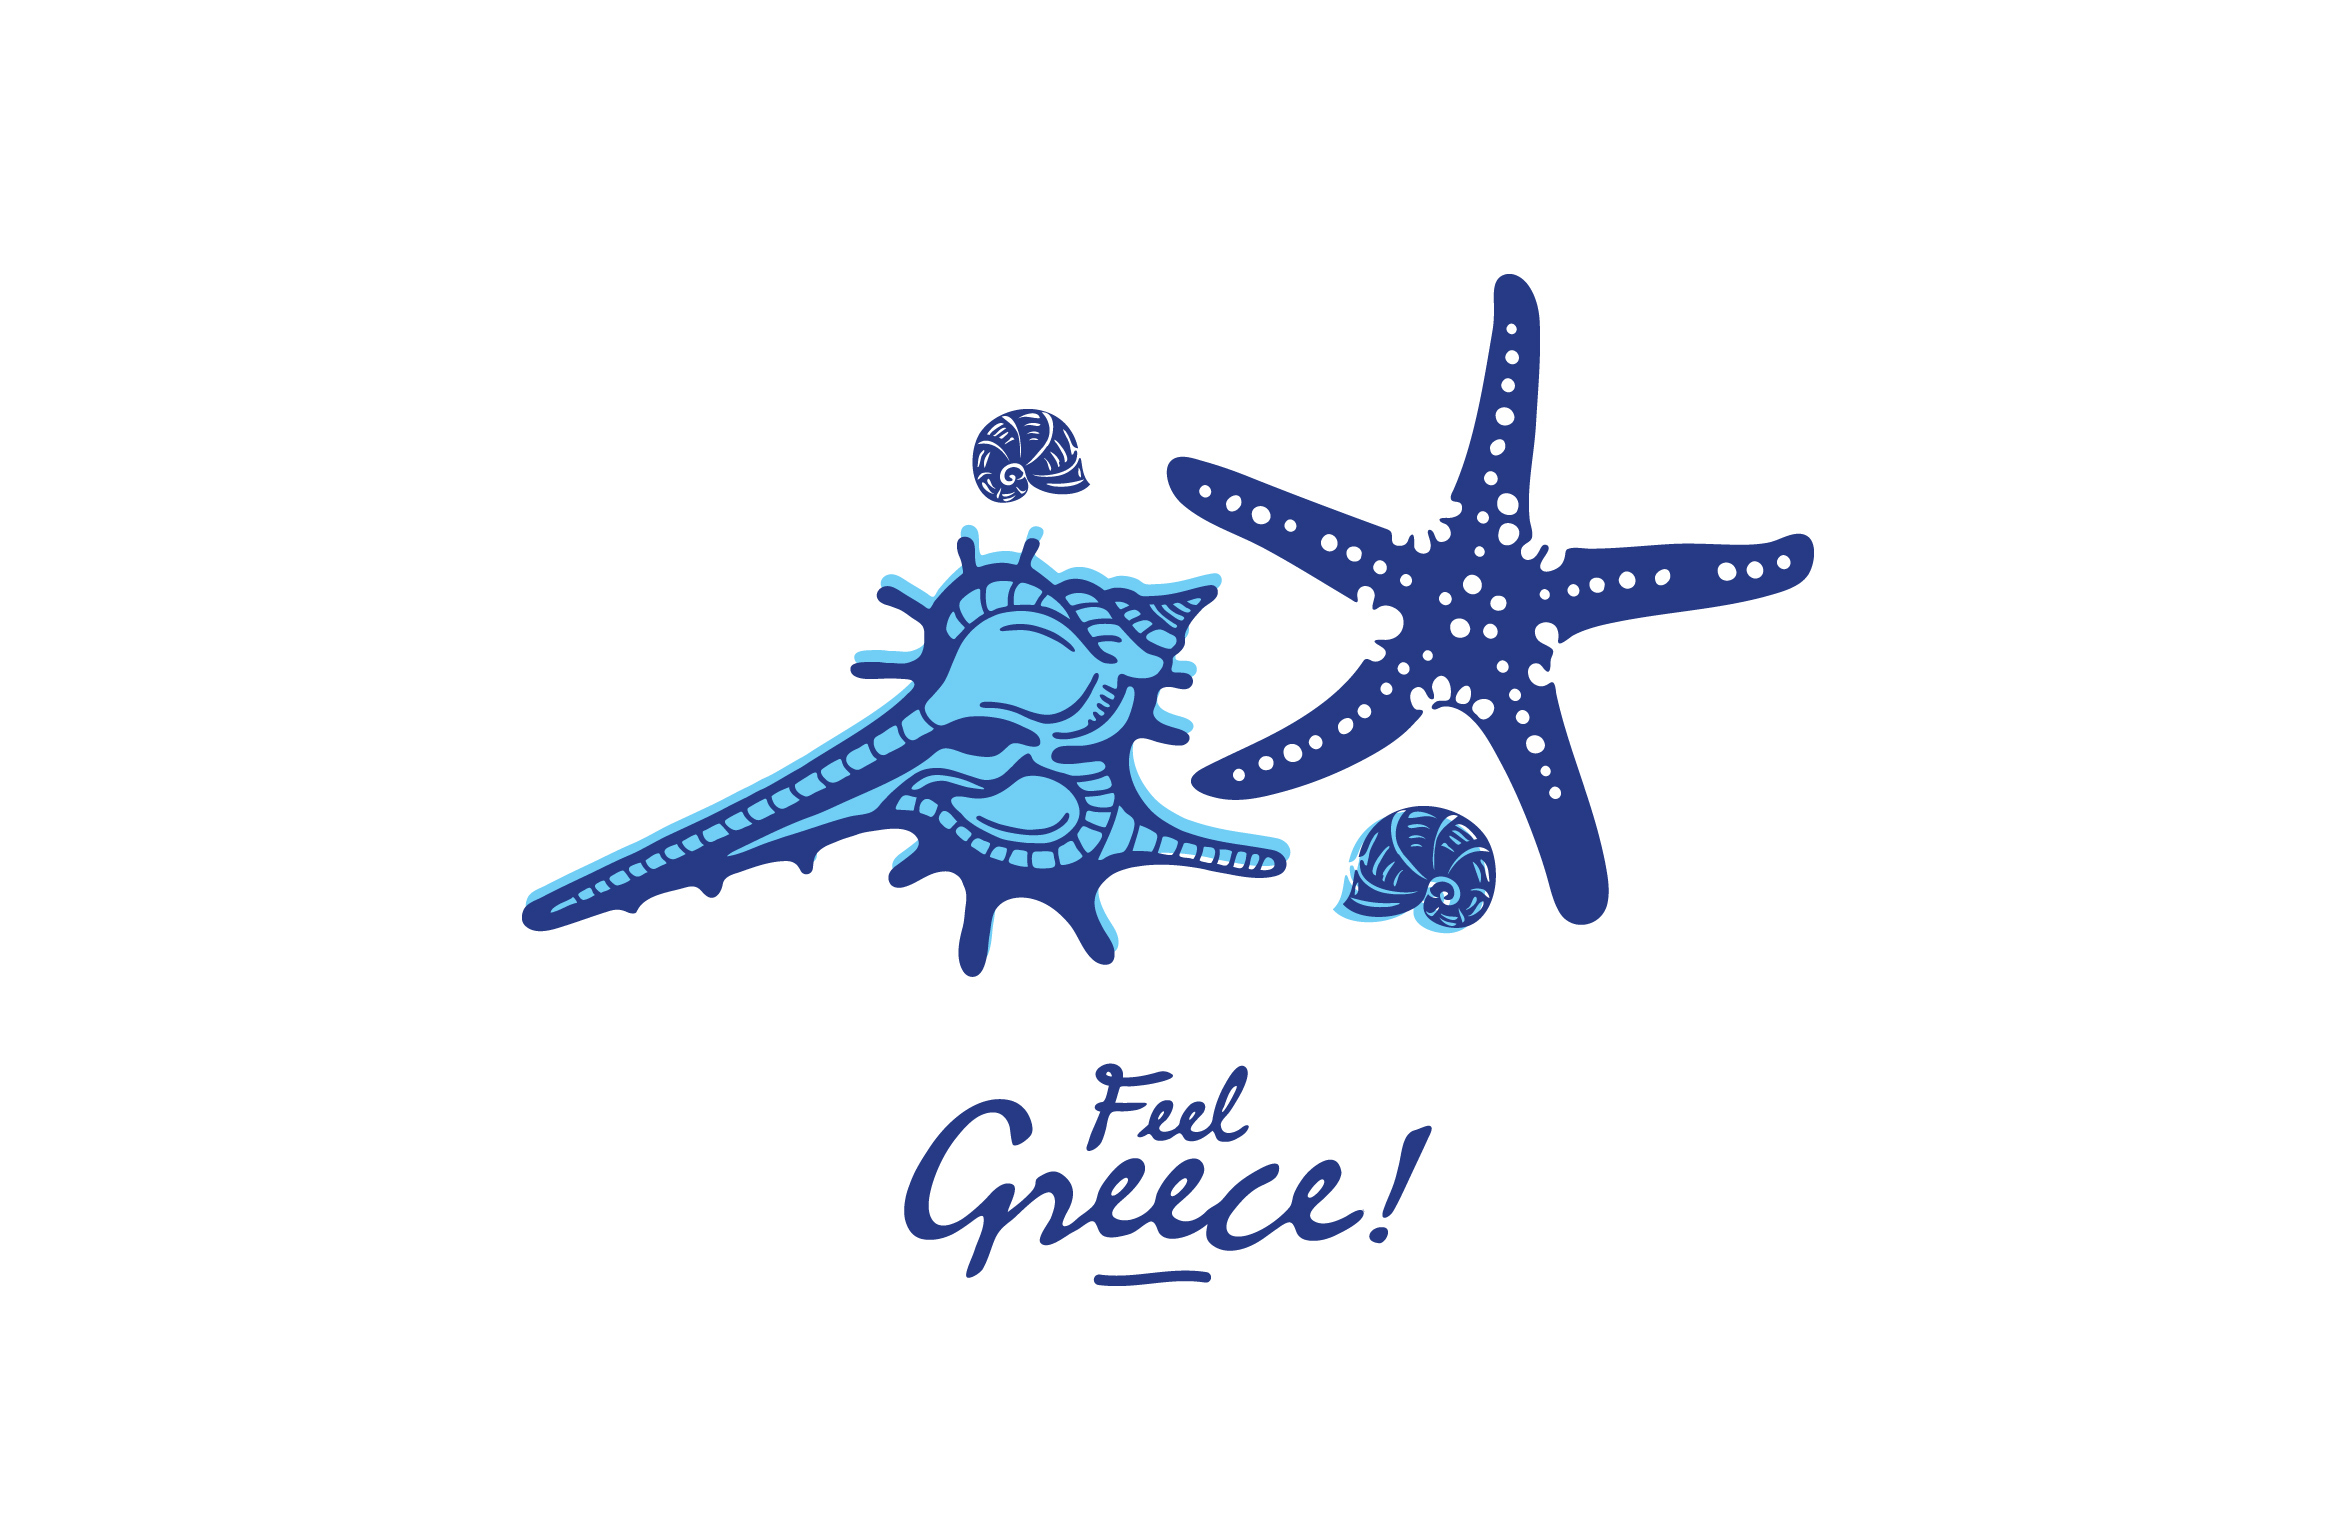 Feel Greece starfish illustration